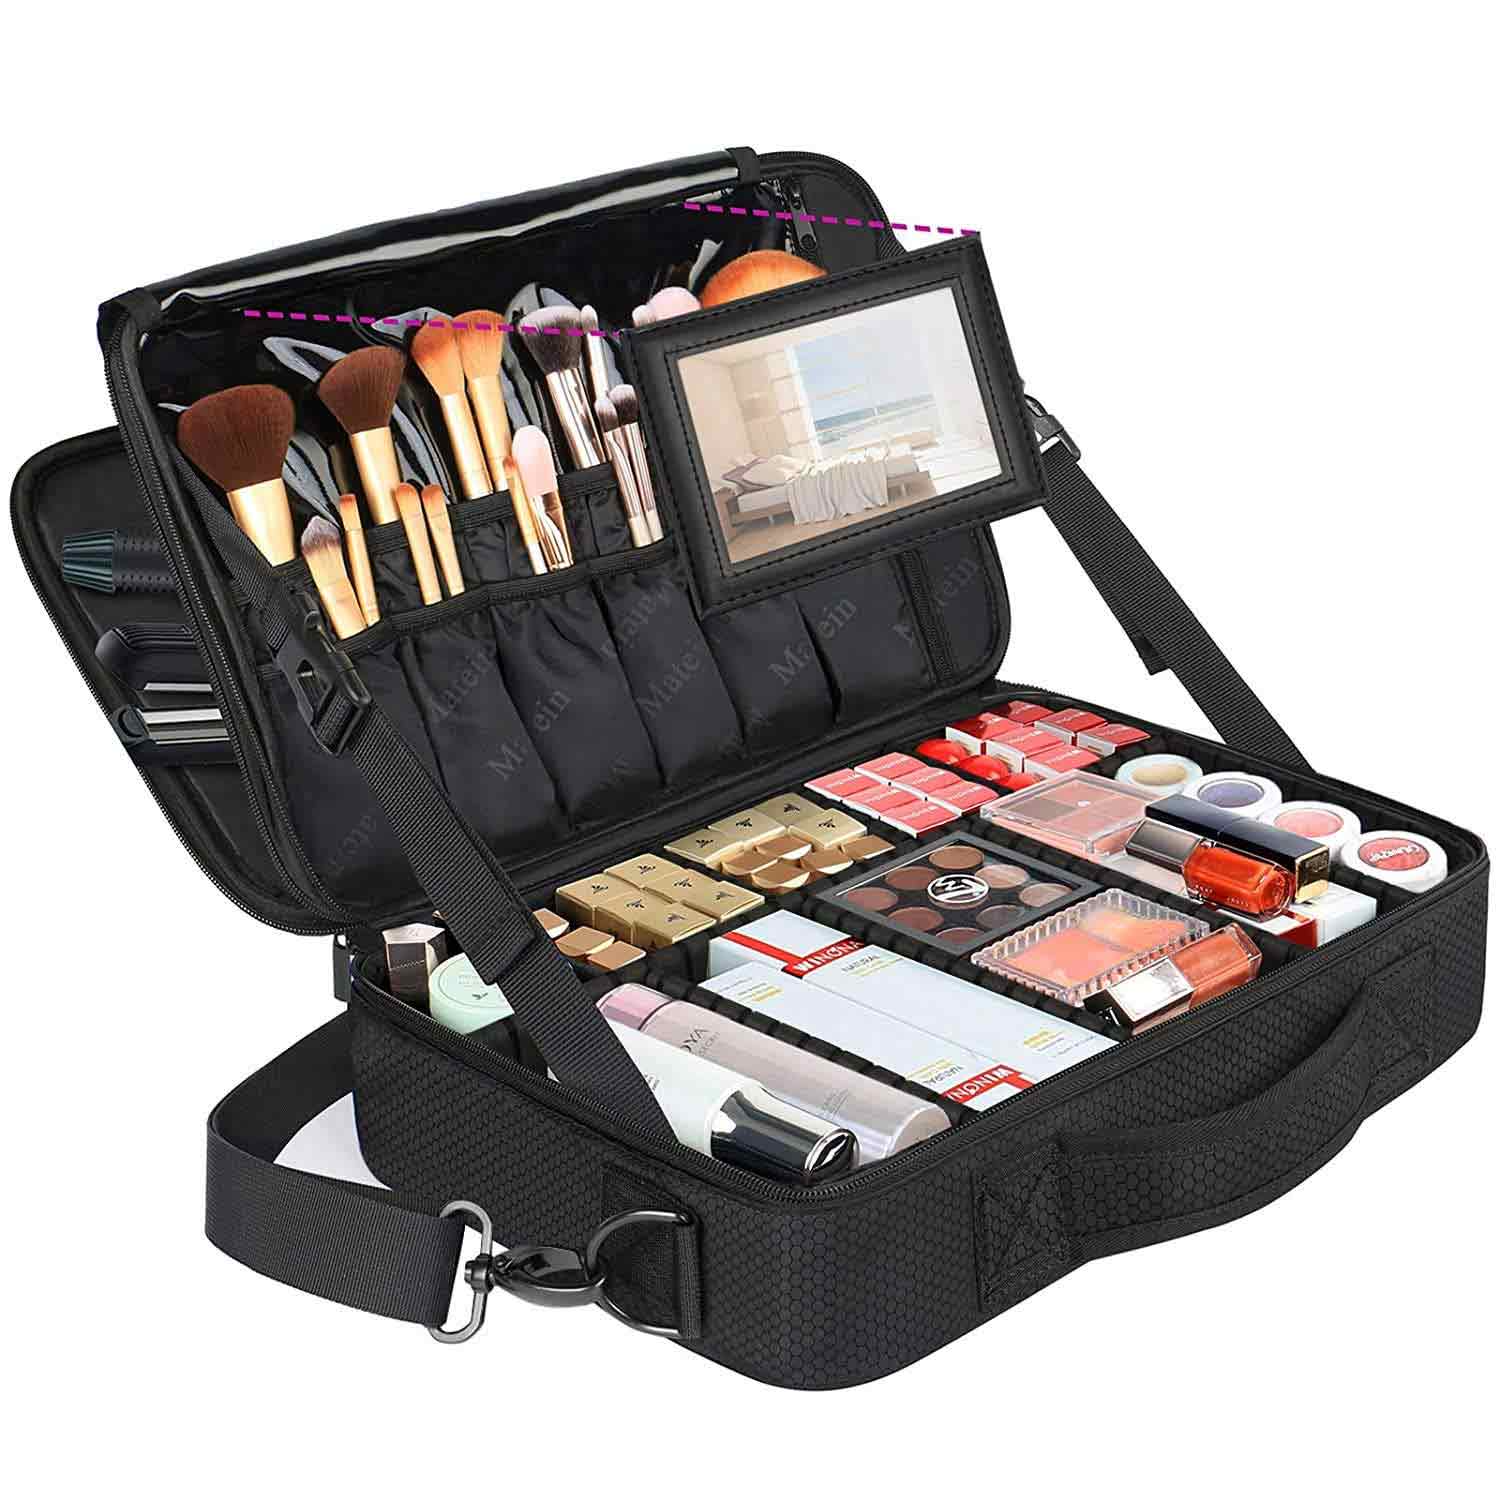  Mrcdbag Lightweight Travel Makeup Organizer Bag